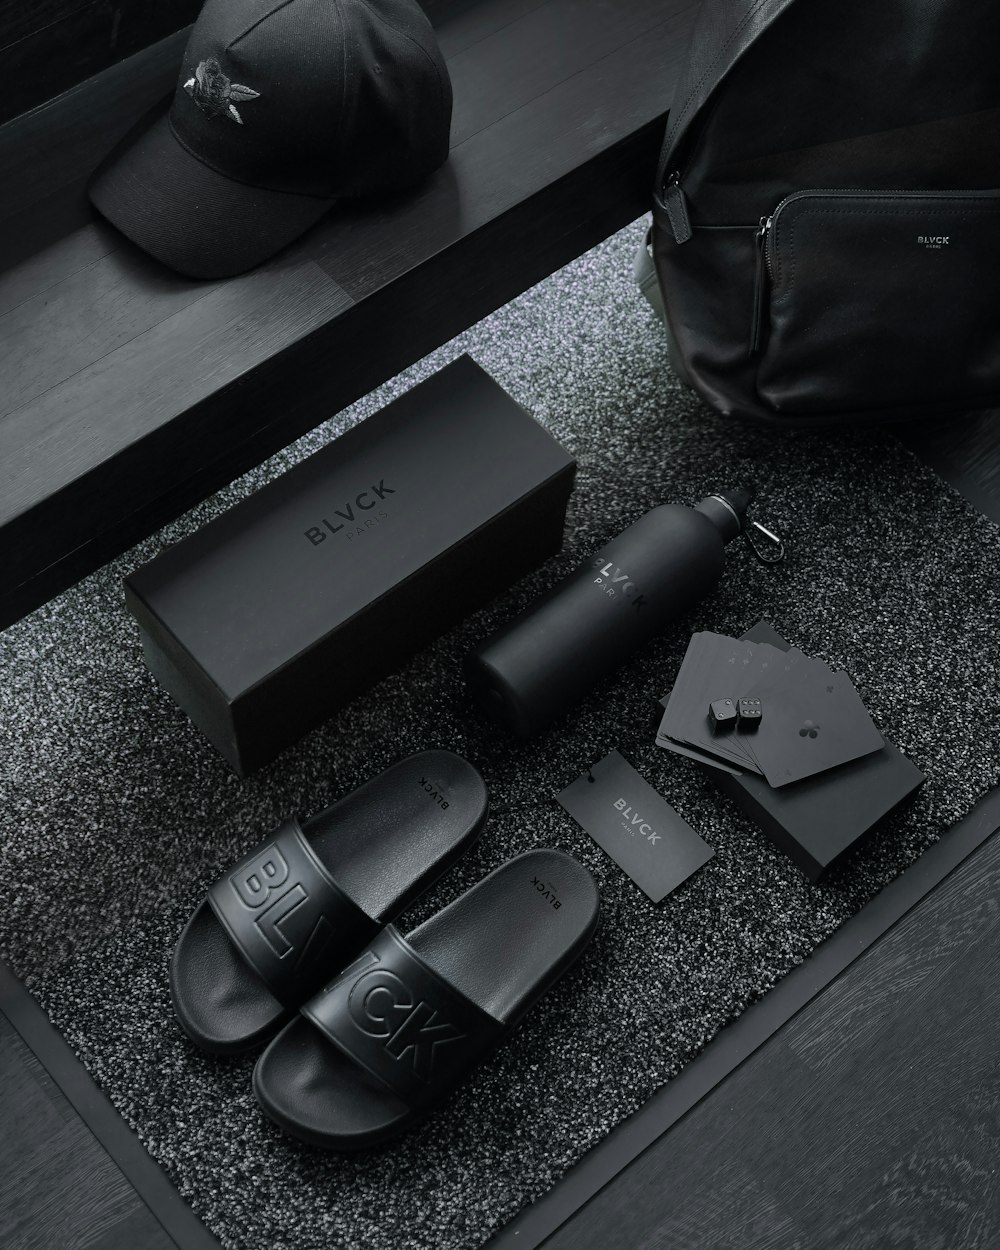 black sony remote control beside black leather bag